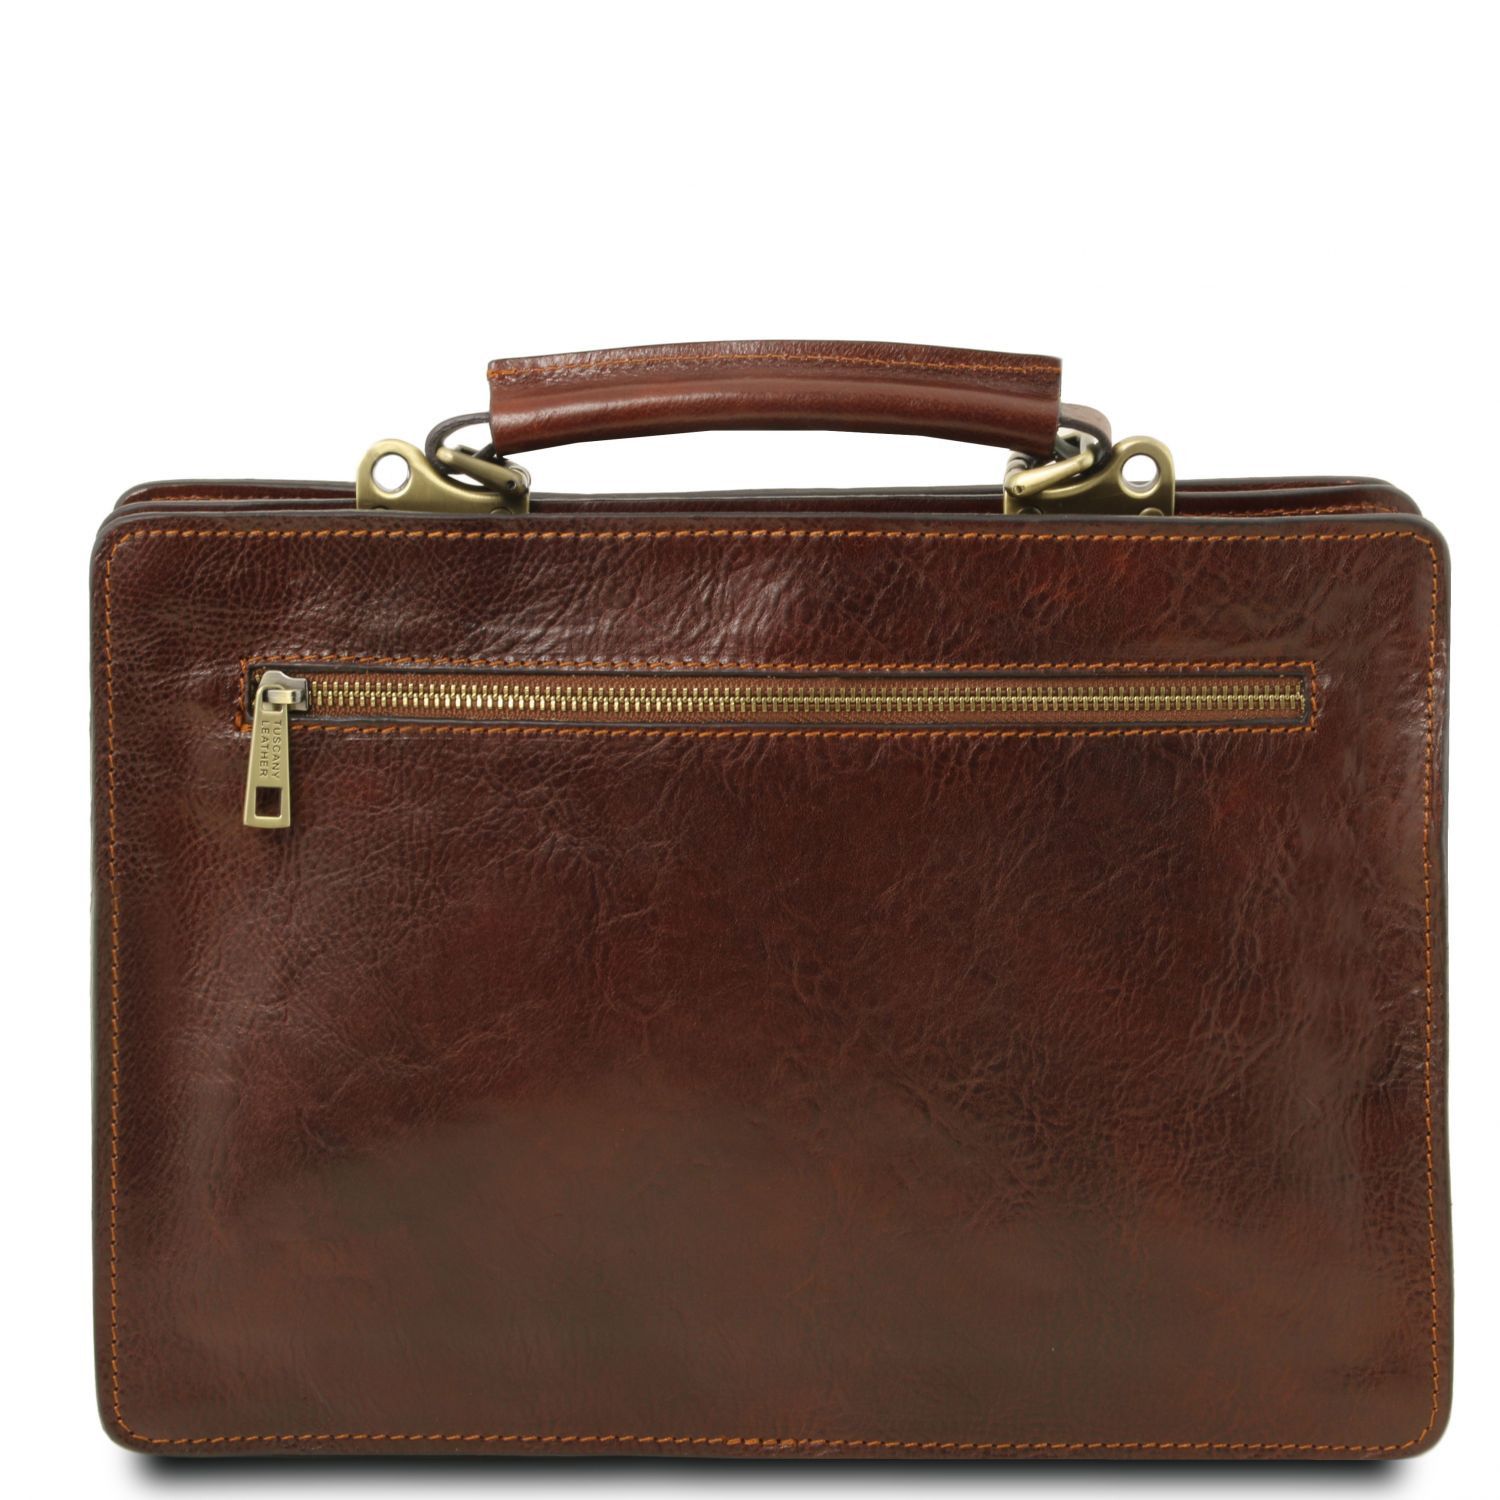 Leather Lady Handbag - Large Size - Tania - Domini Leather